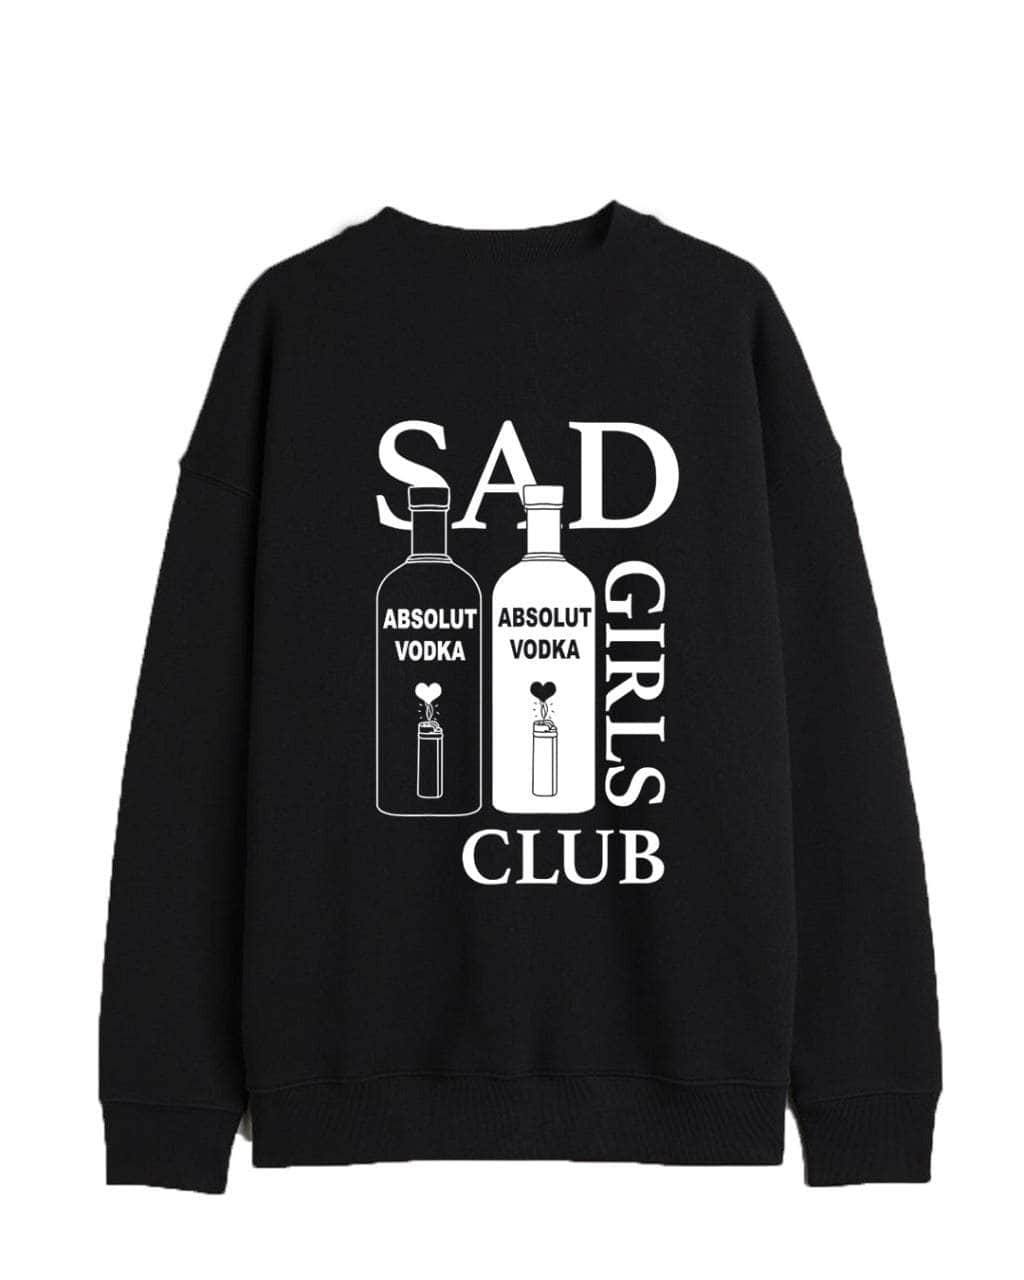 Sad Girls Baggy Sweatshirt - BEEGLEE